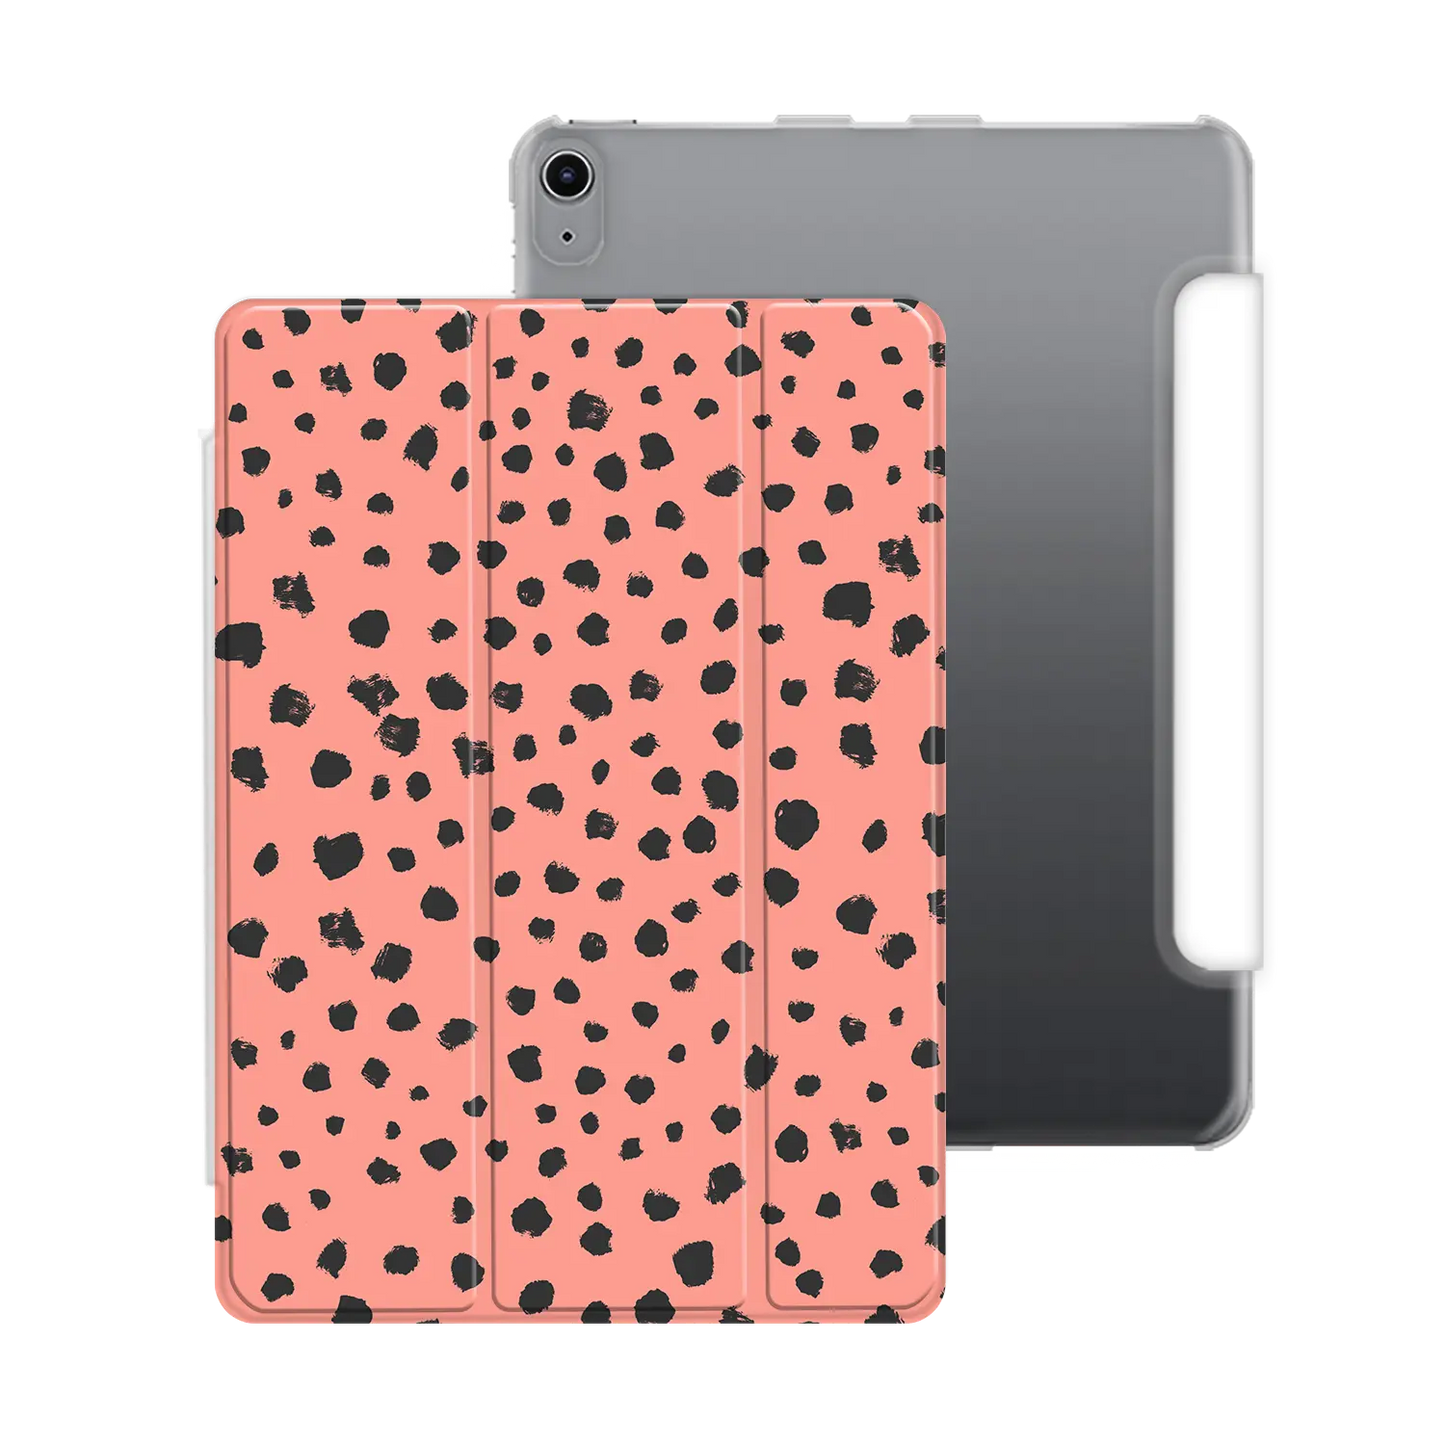 Grunge Dots - iPad personnalisé coque